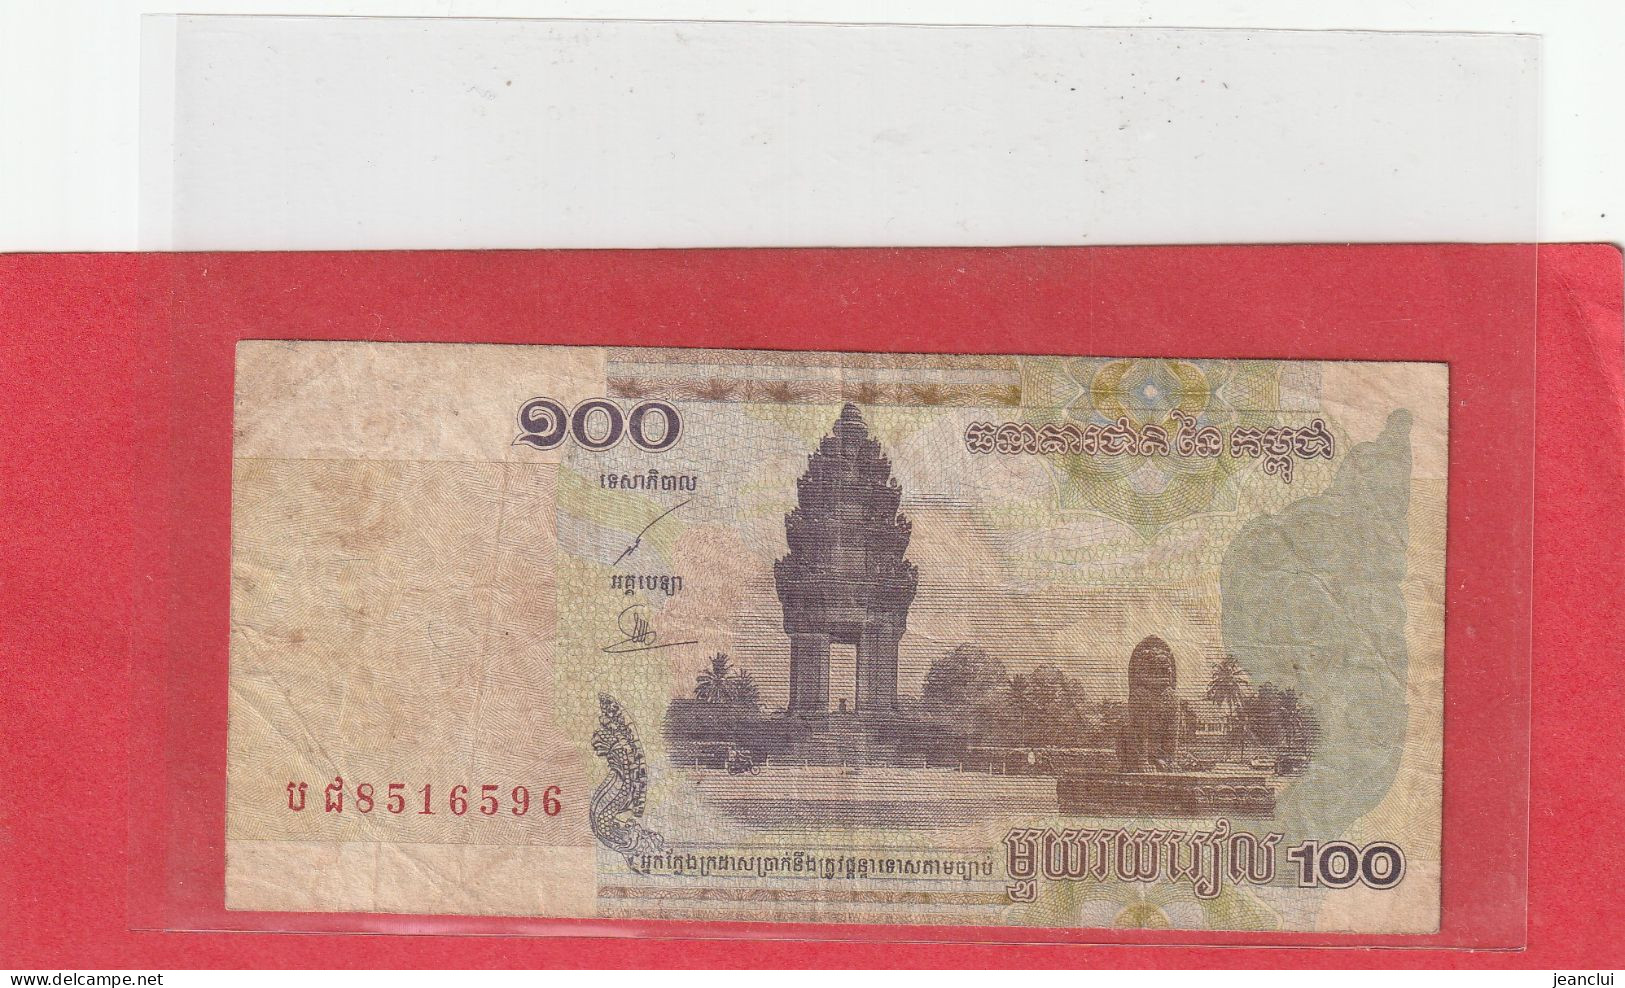 BANQUE NATIONALE DU CAMBODGE  .  100 RIELS  . 2001  . N°  8516596  .  BILLET USITE  .  2 SCANNES - Cambodge